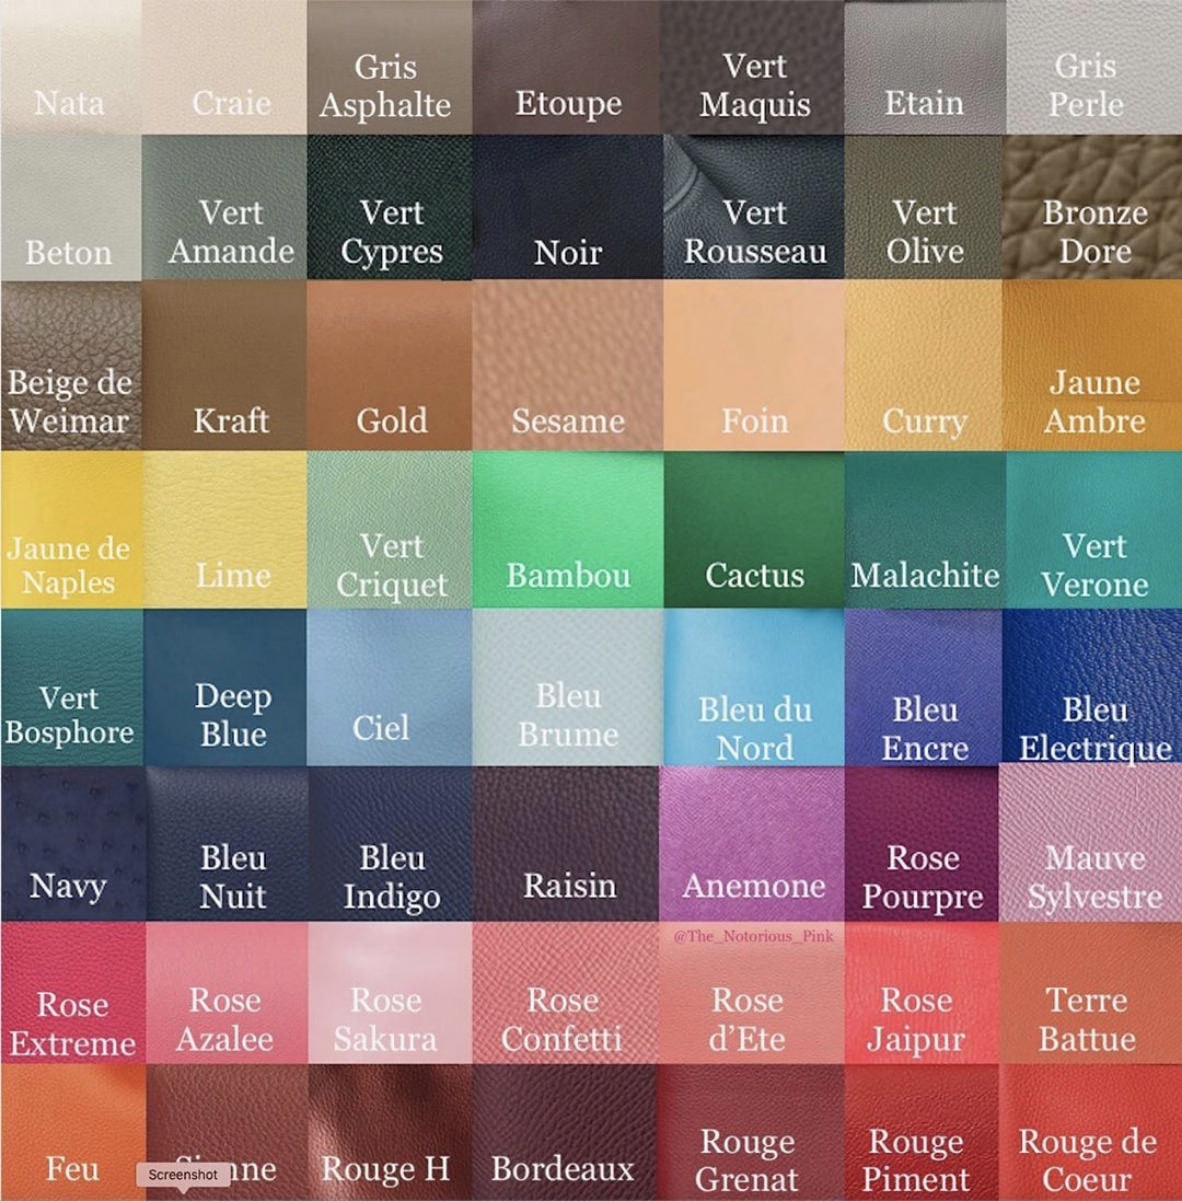 Hermes Bag Colour Chart